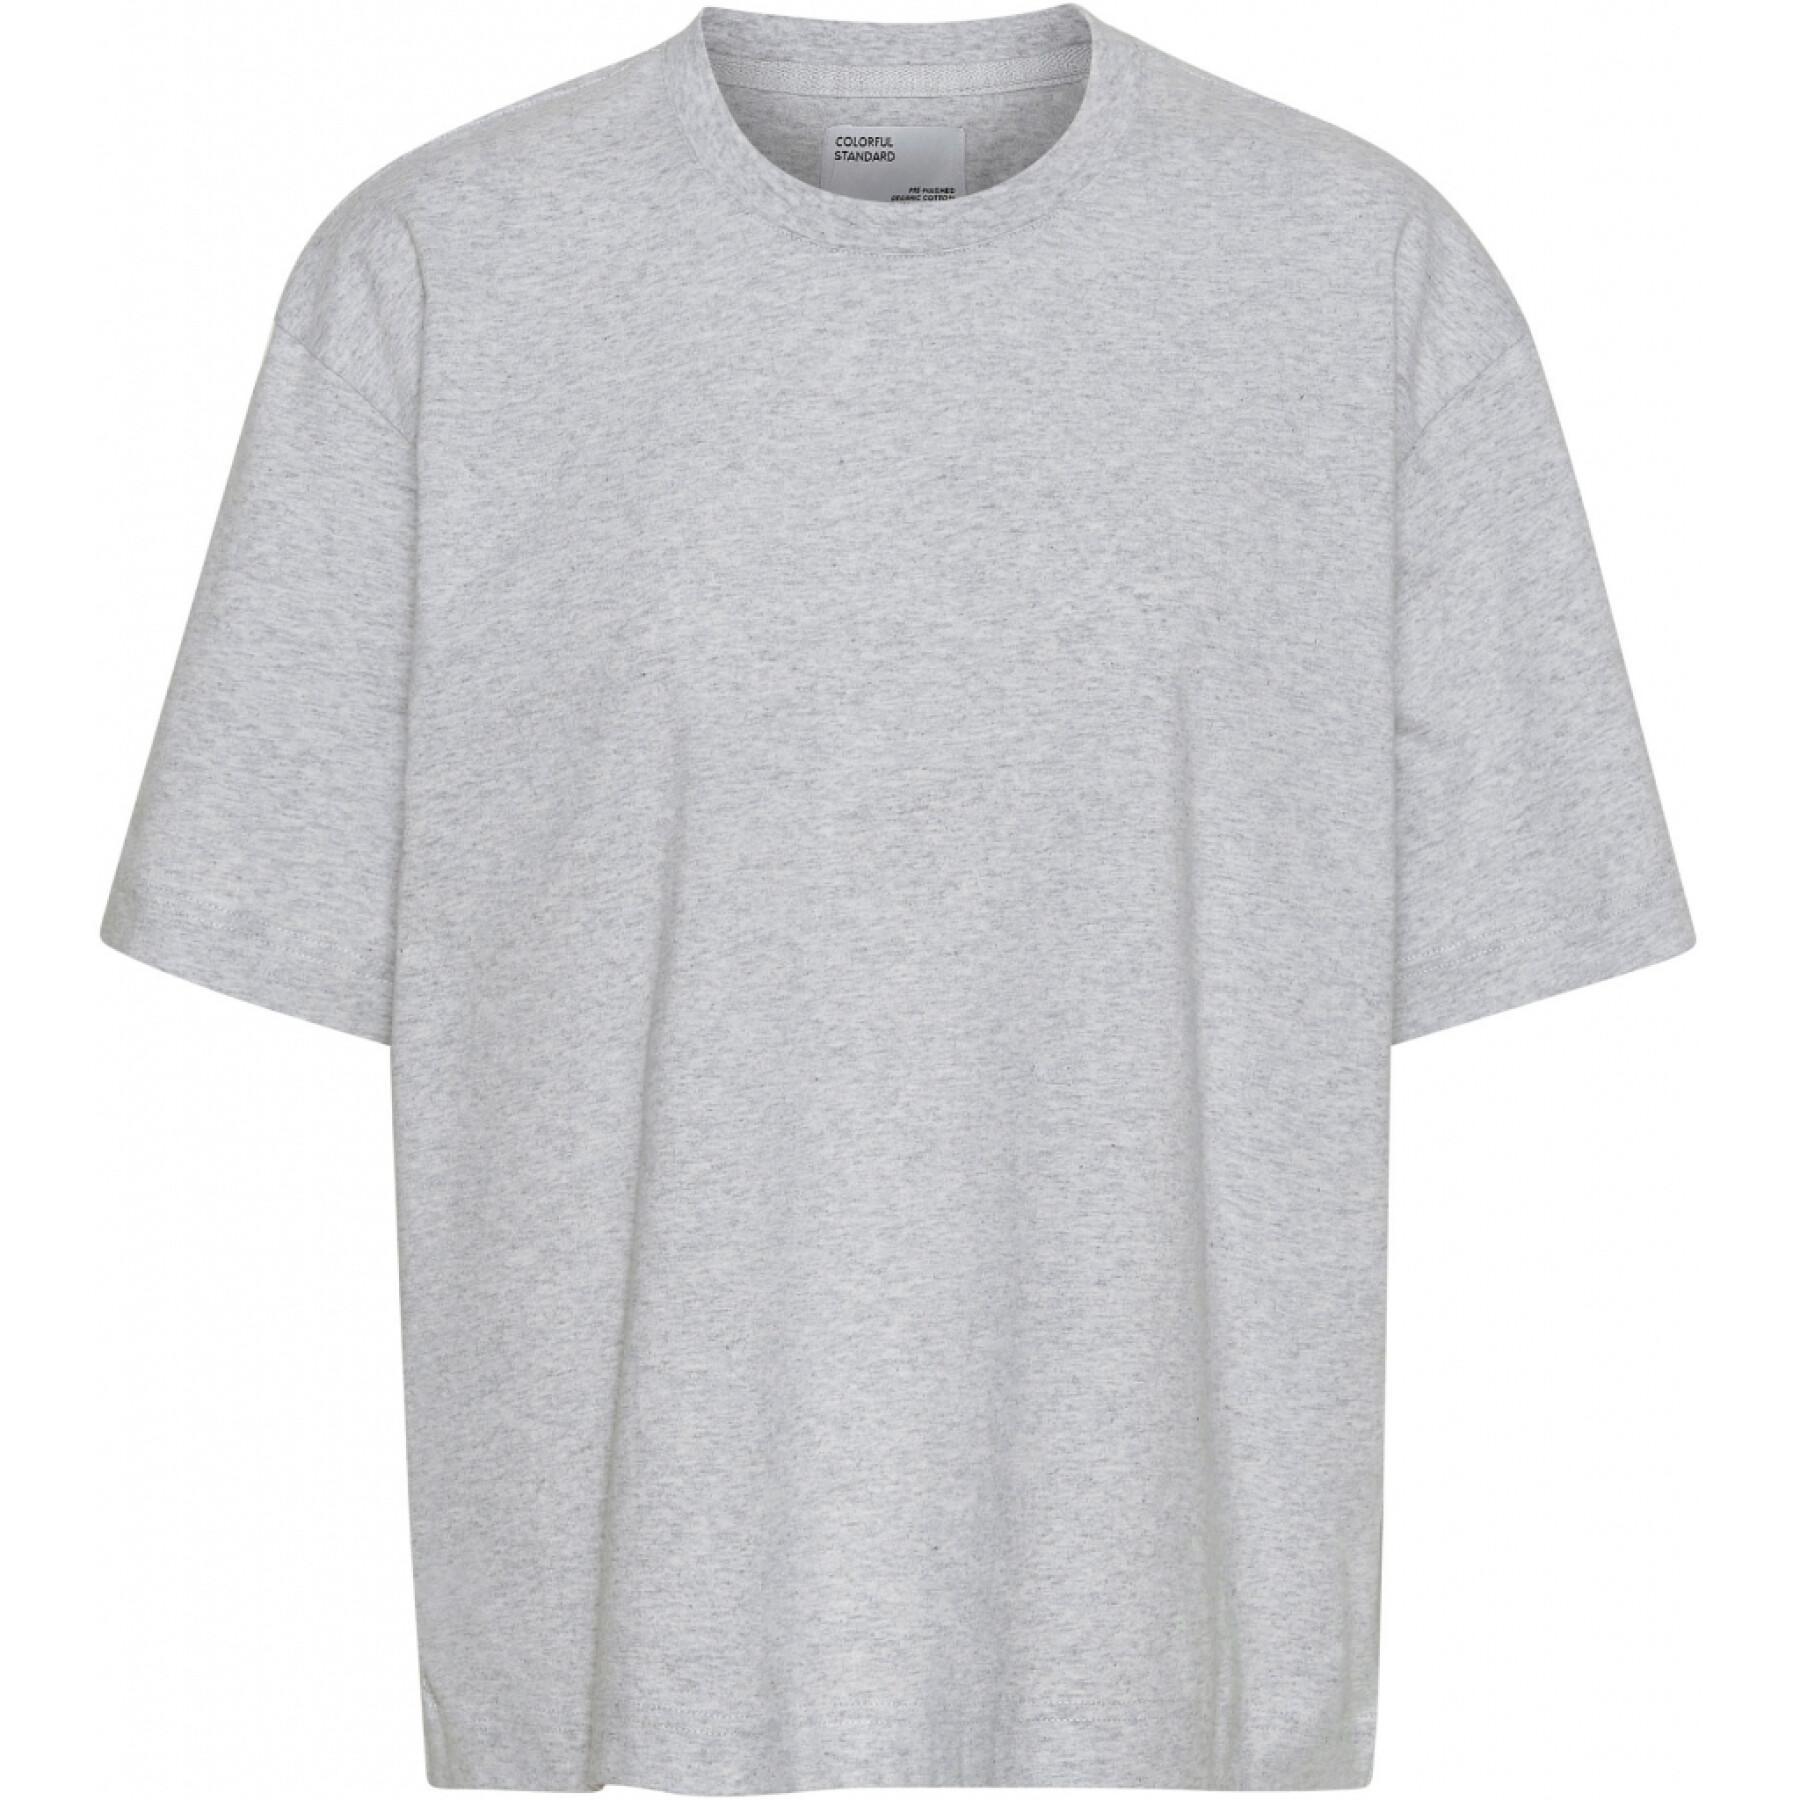 Women's T-shirt Colorful Standard Organic oversized heather grey